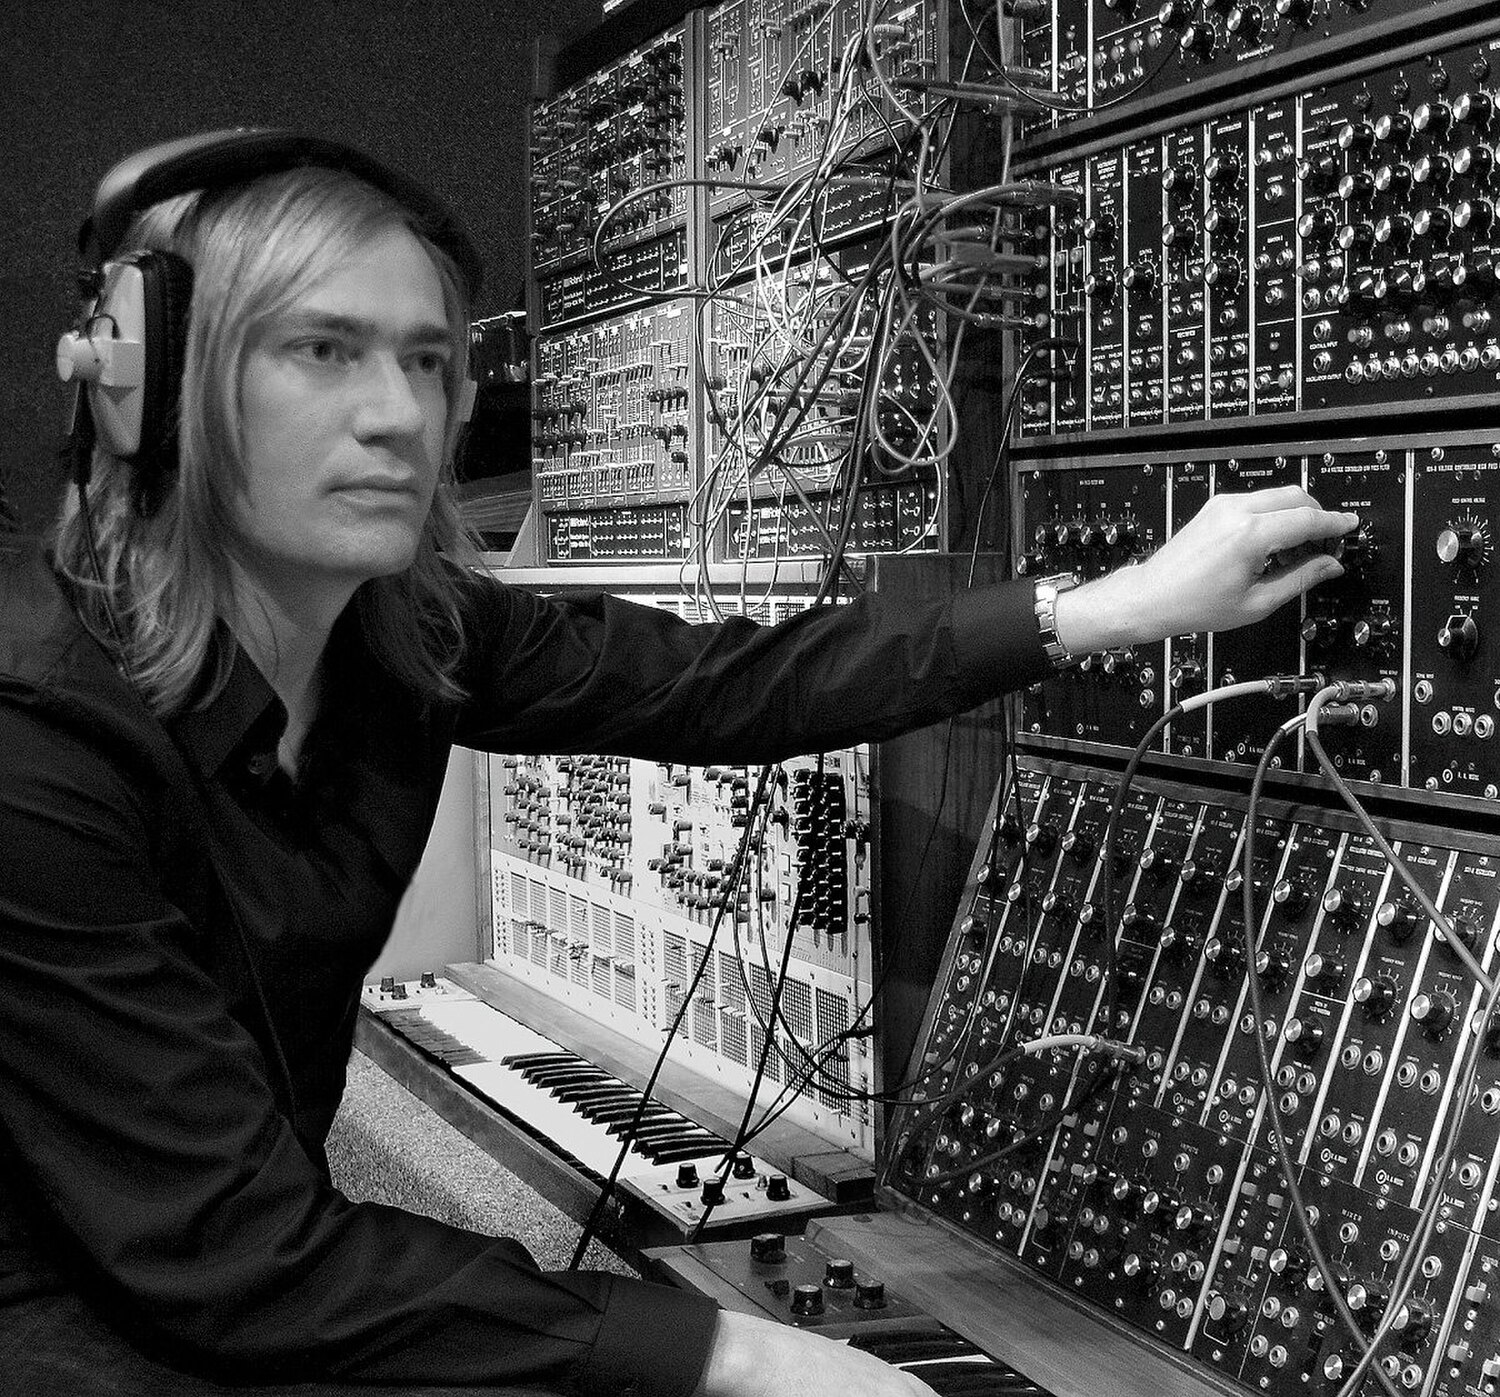 Примеры электронной музыки. Бен Эдвардс. Электронный музыкант. Музыканты электронной музыки. Шедевры электронной музыки.